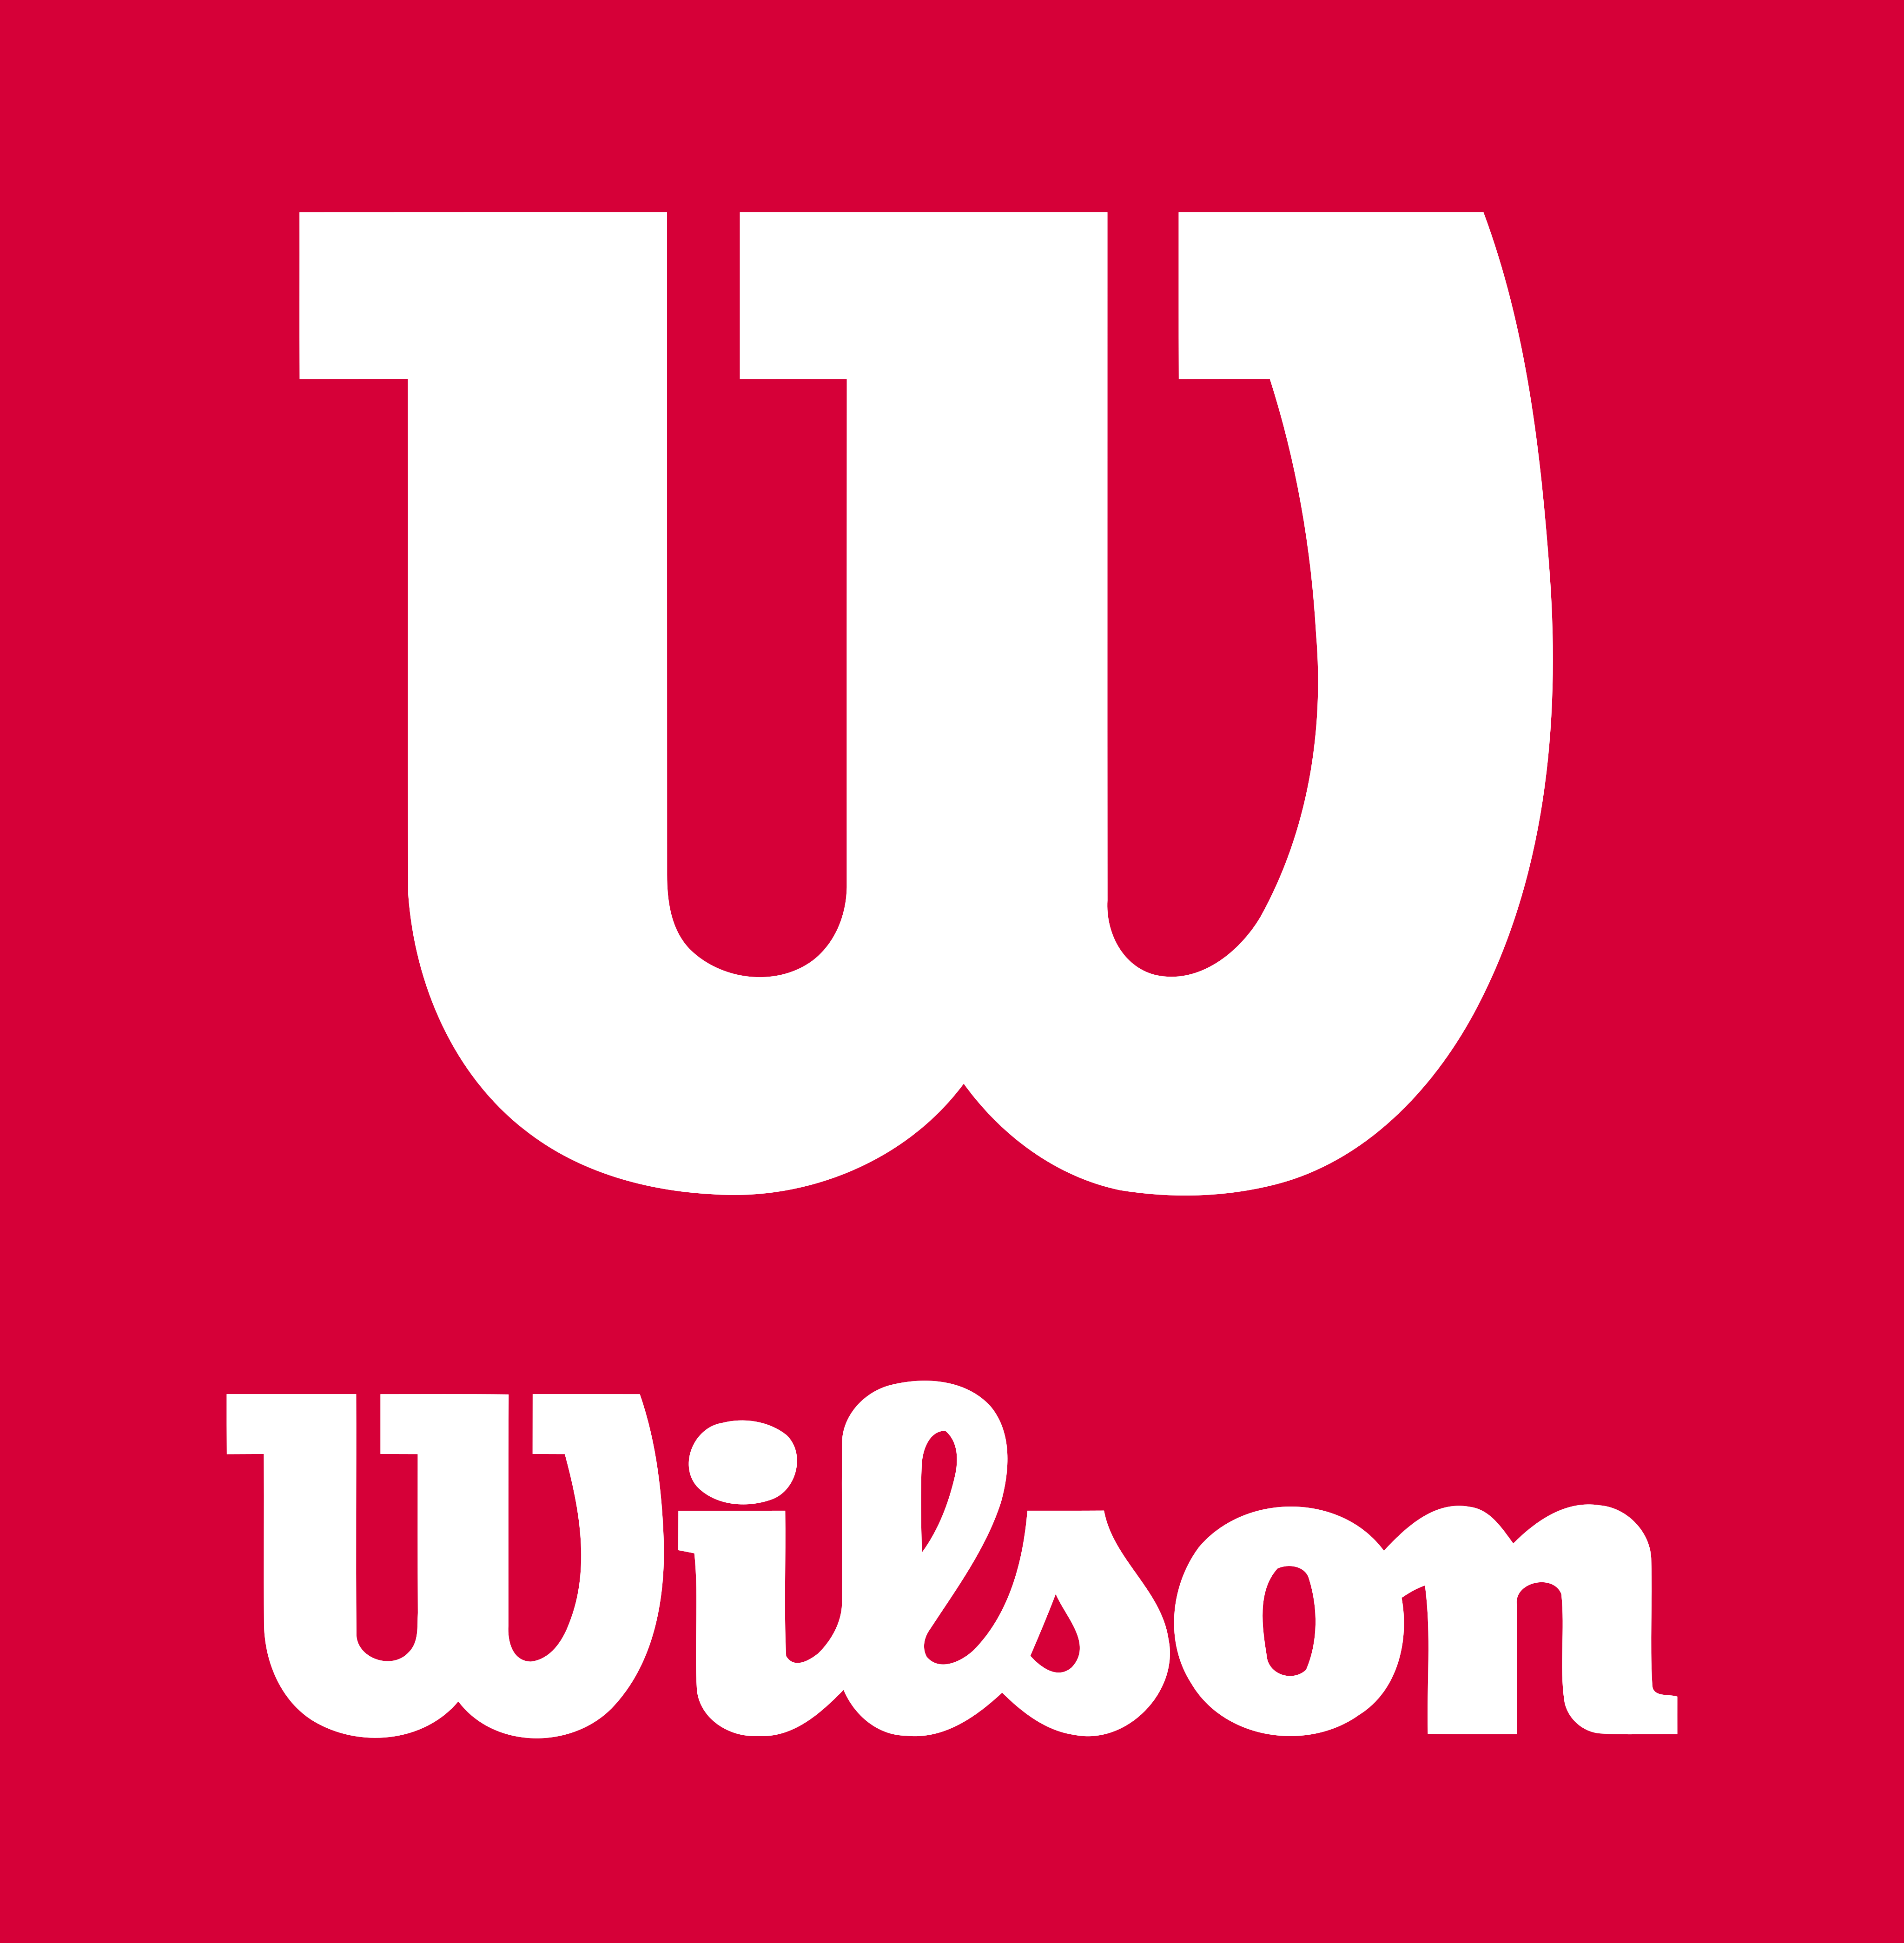 wilson logo 1 - Wilson Logo